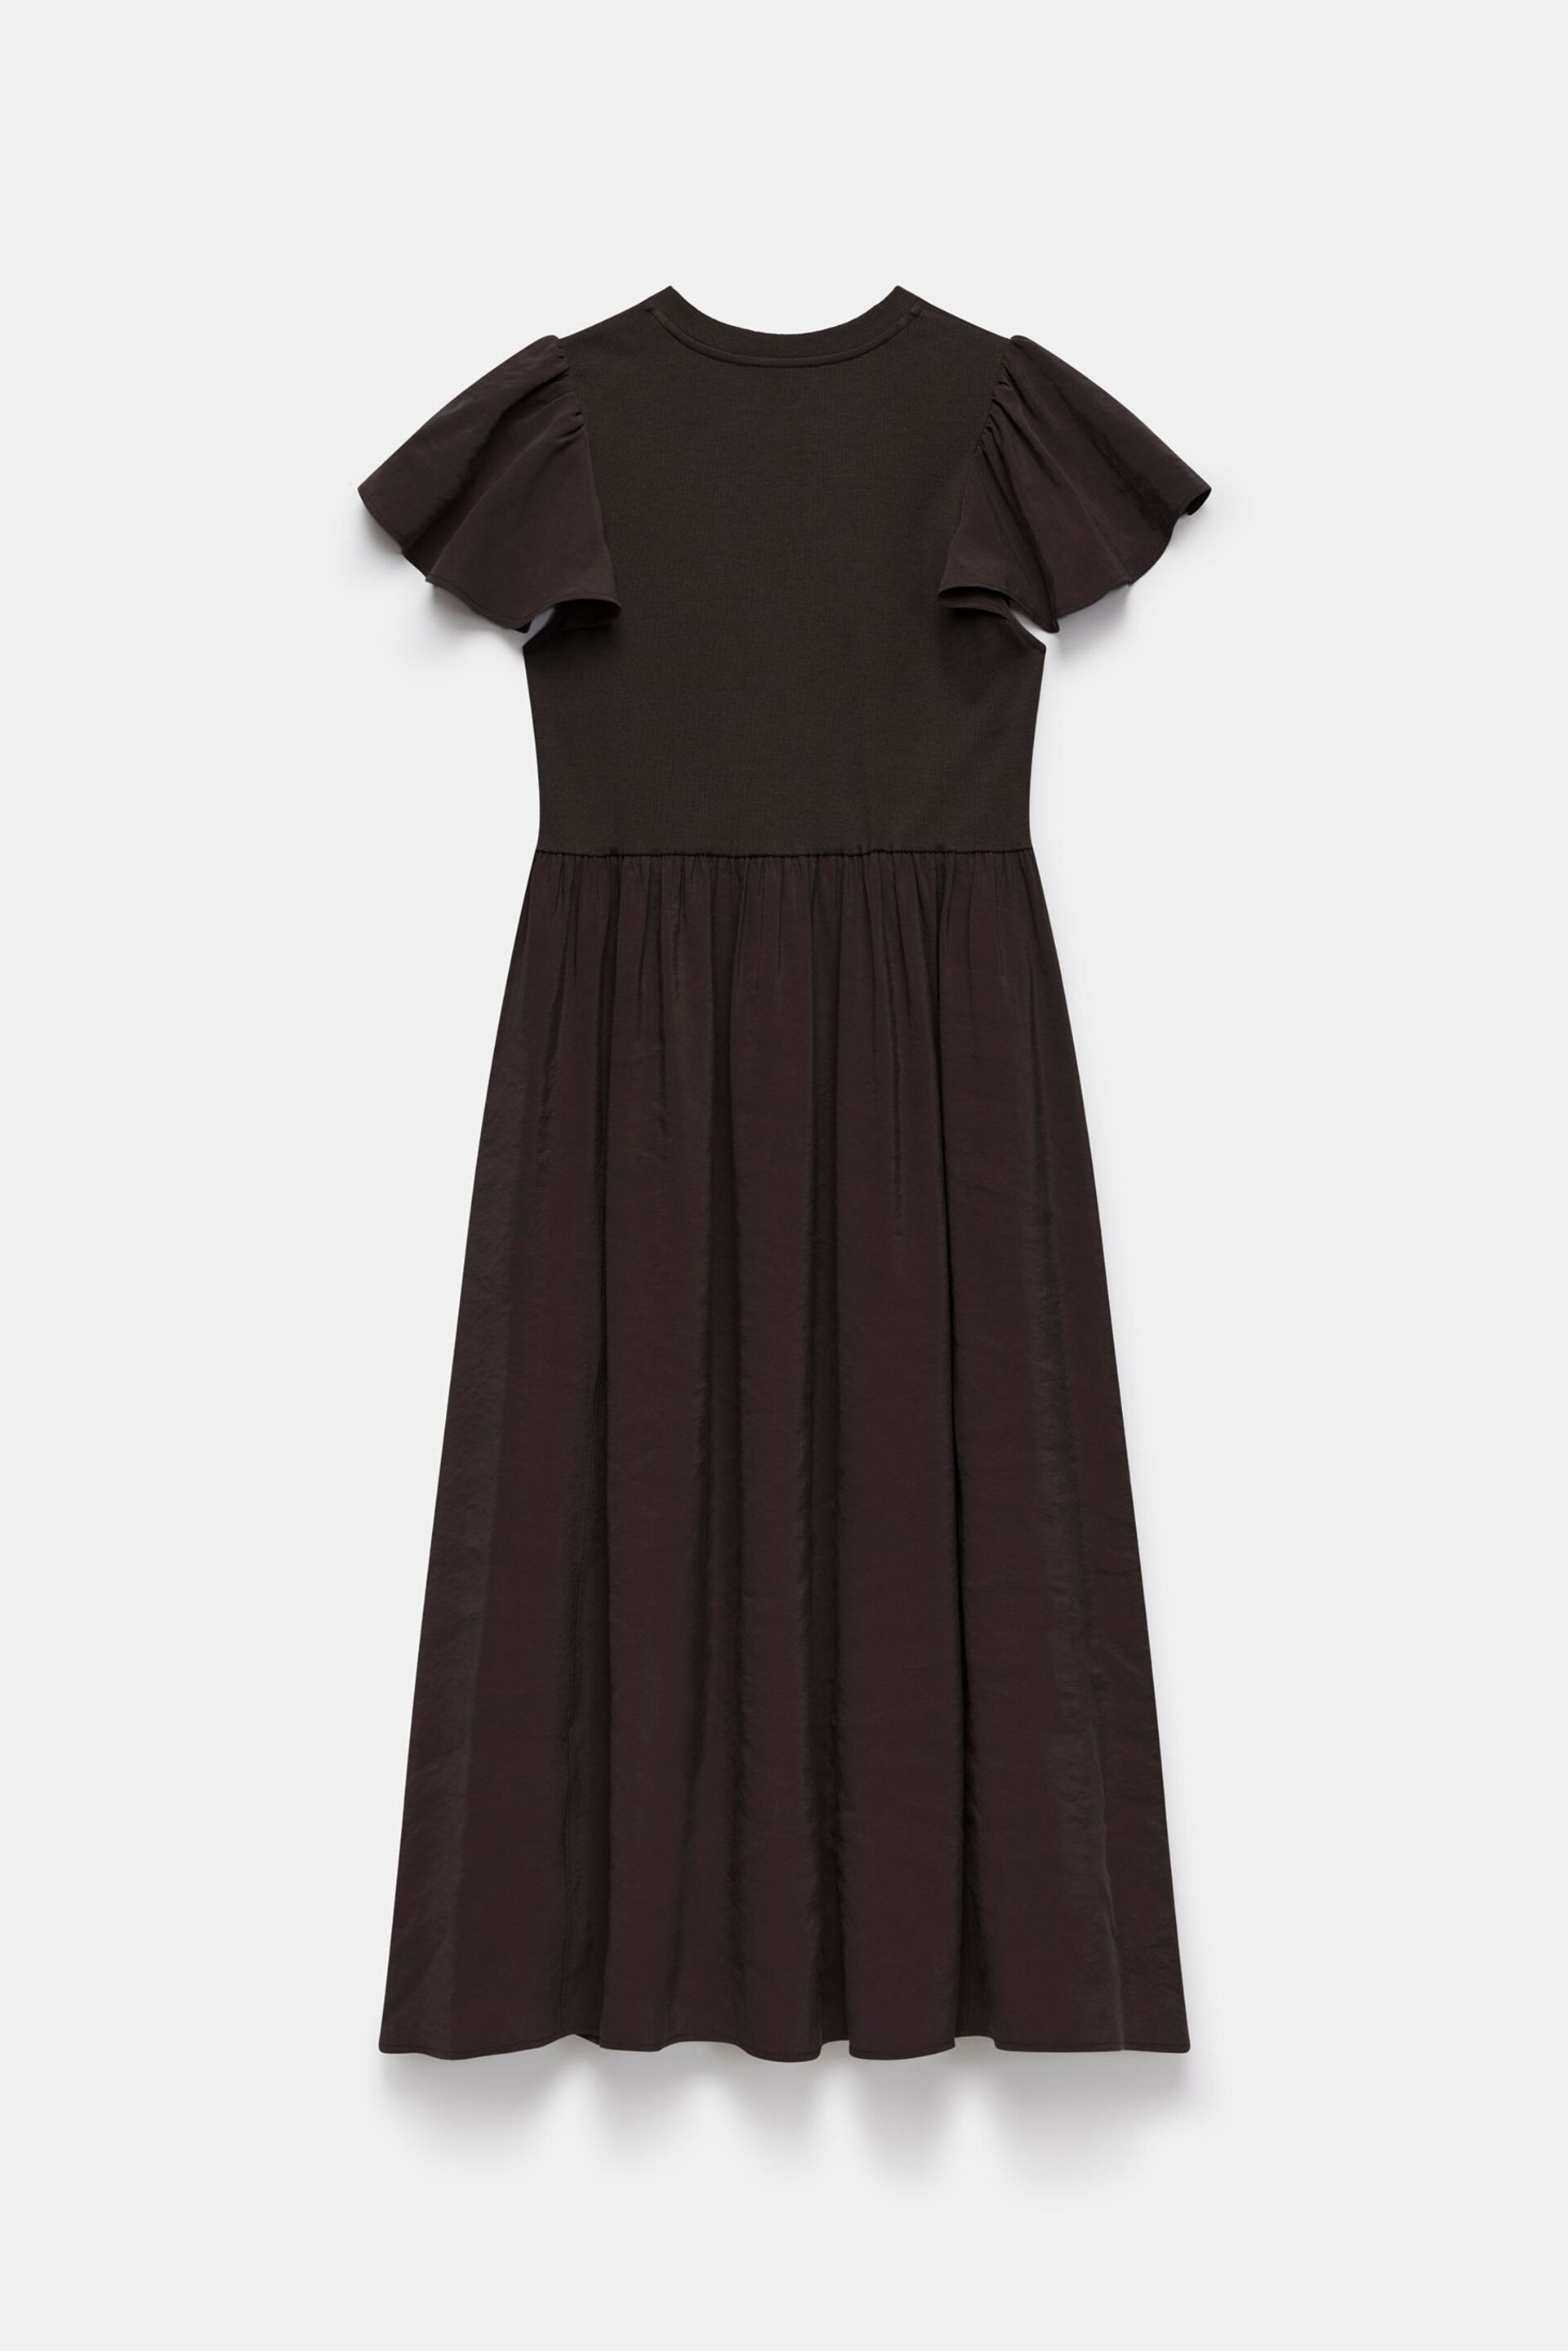 Mint Velvet Brown Jersey Ruffle Midi Dress - Image 3 of 3